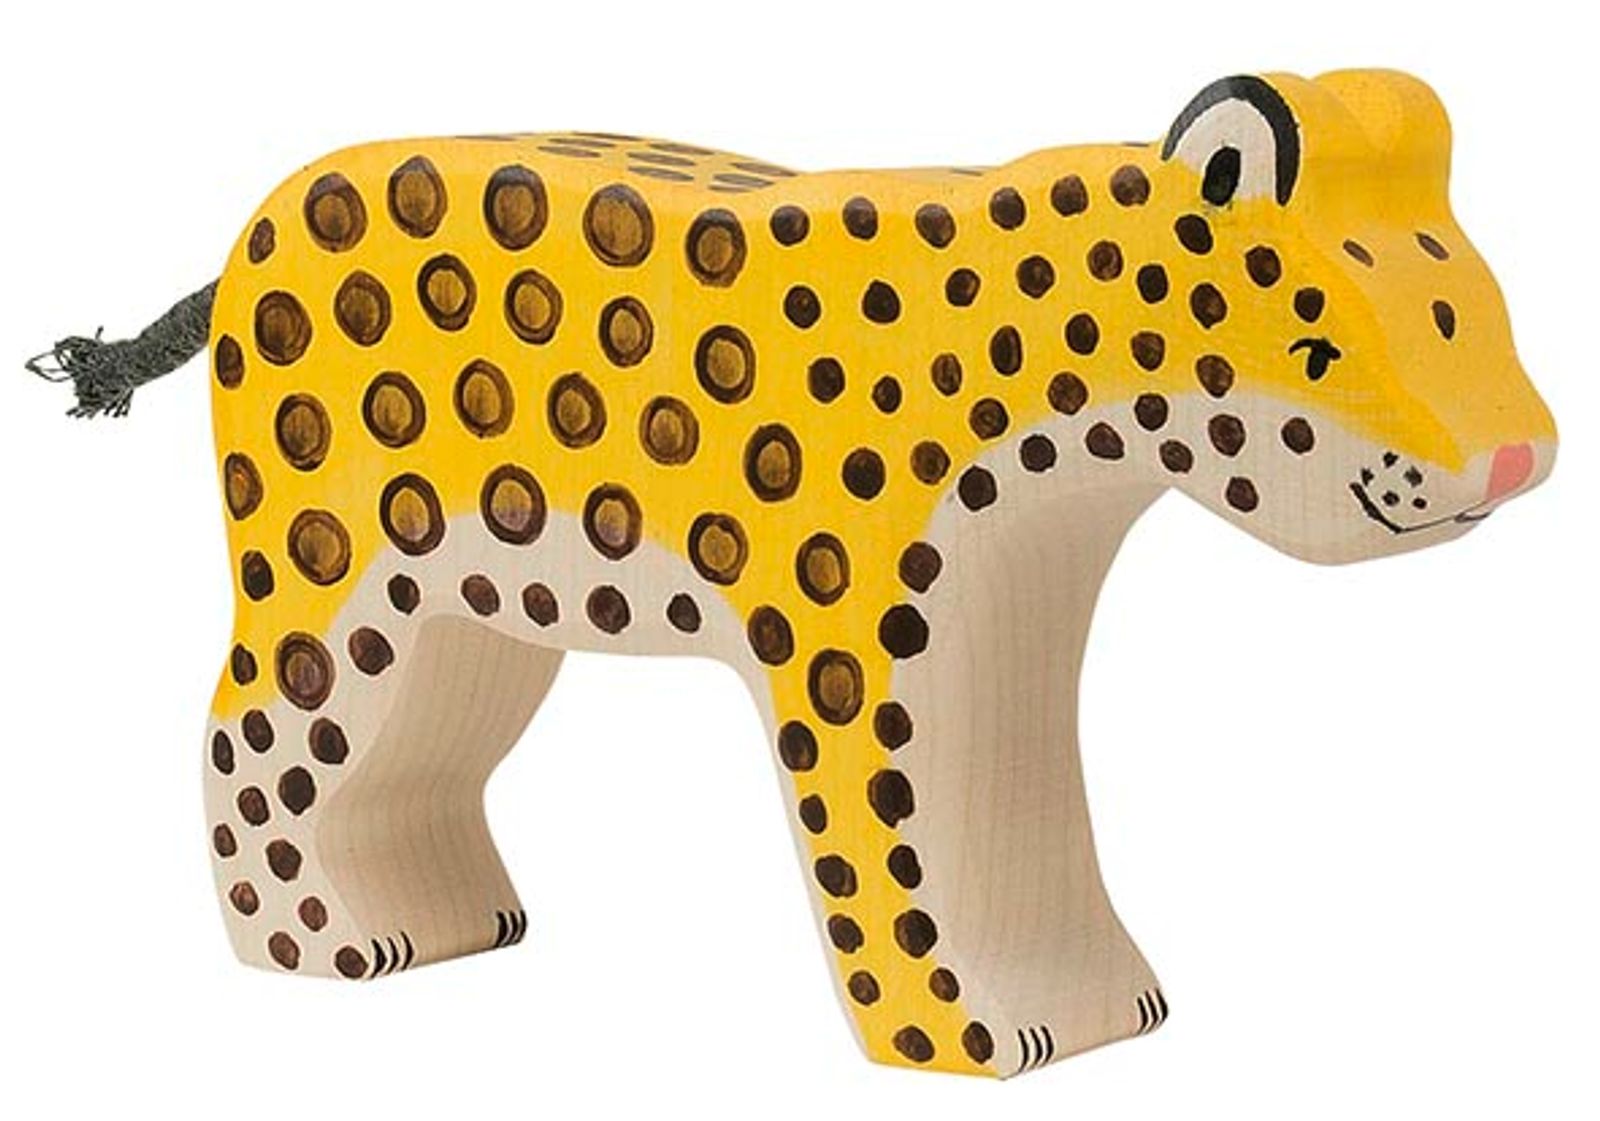 Leopard